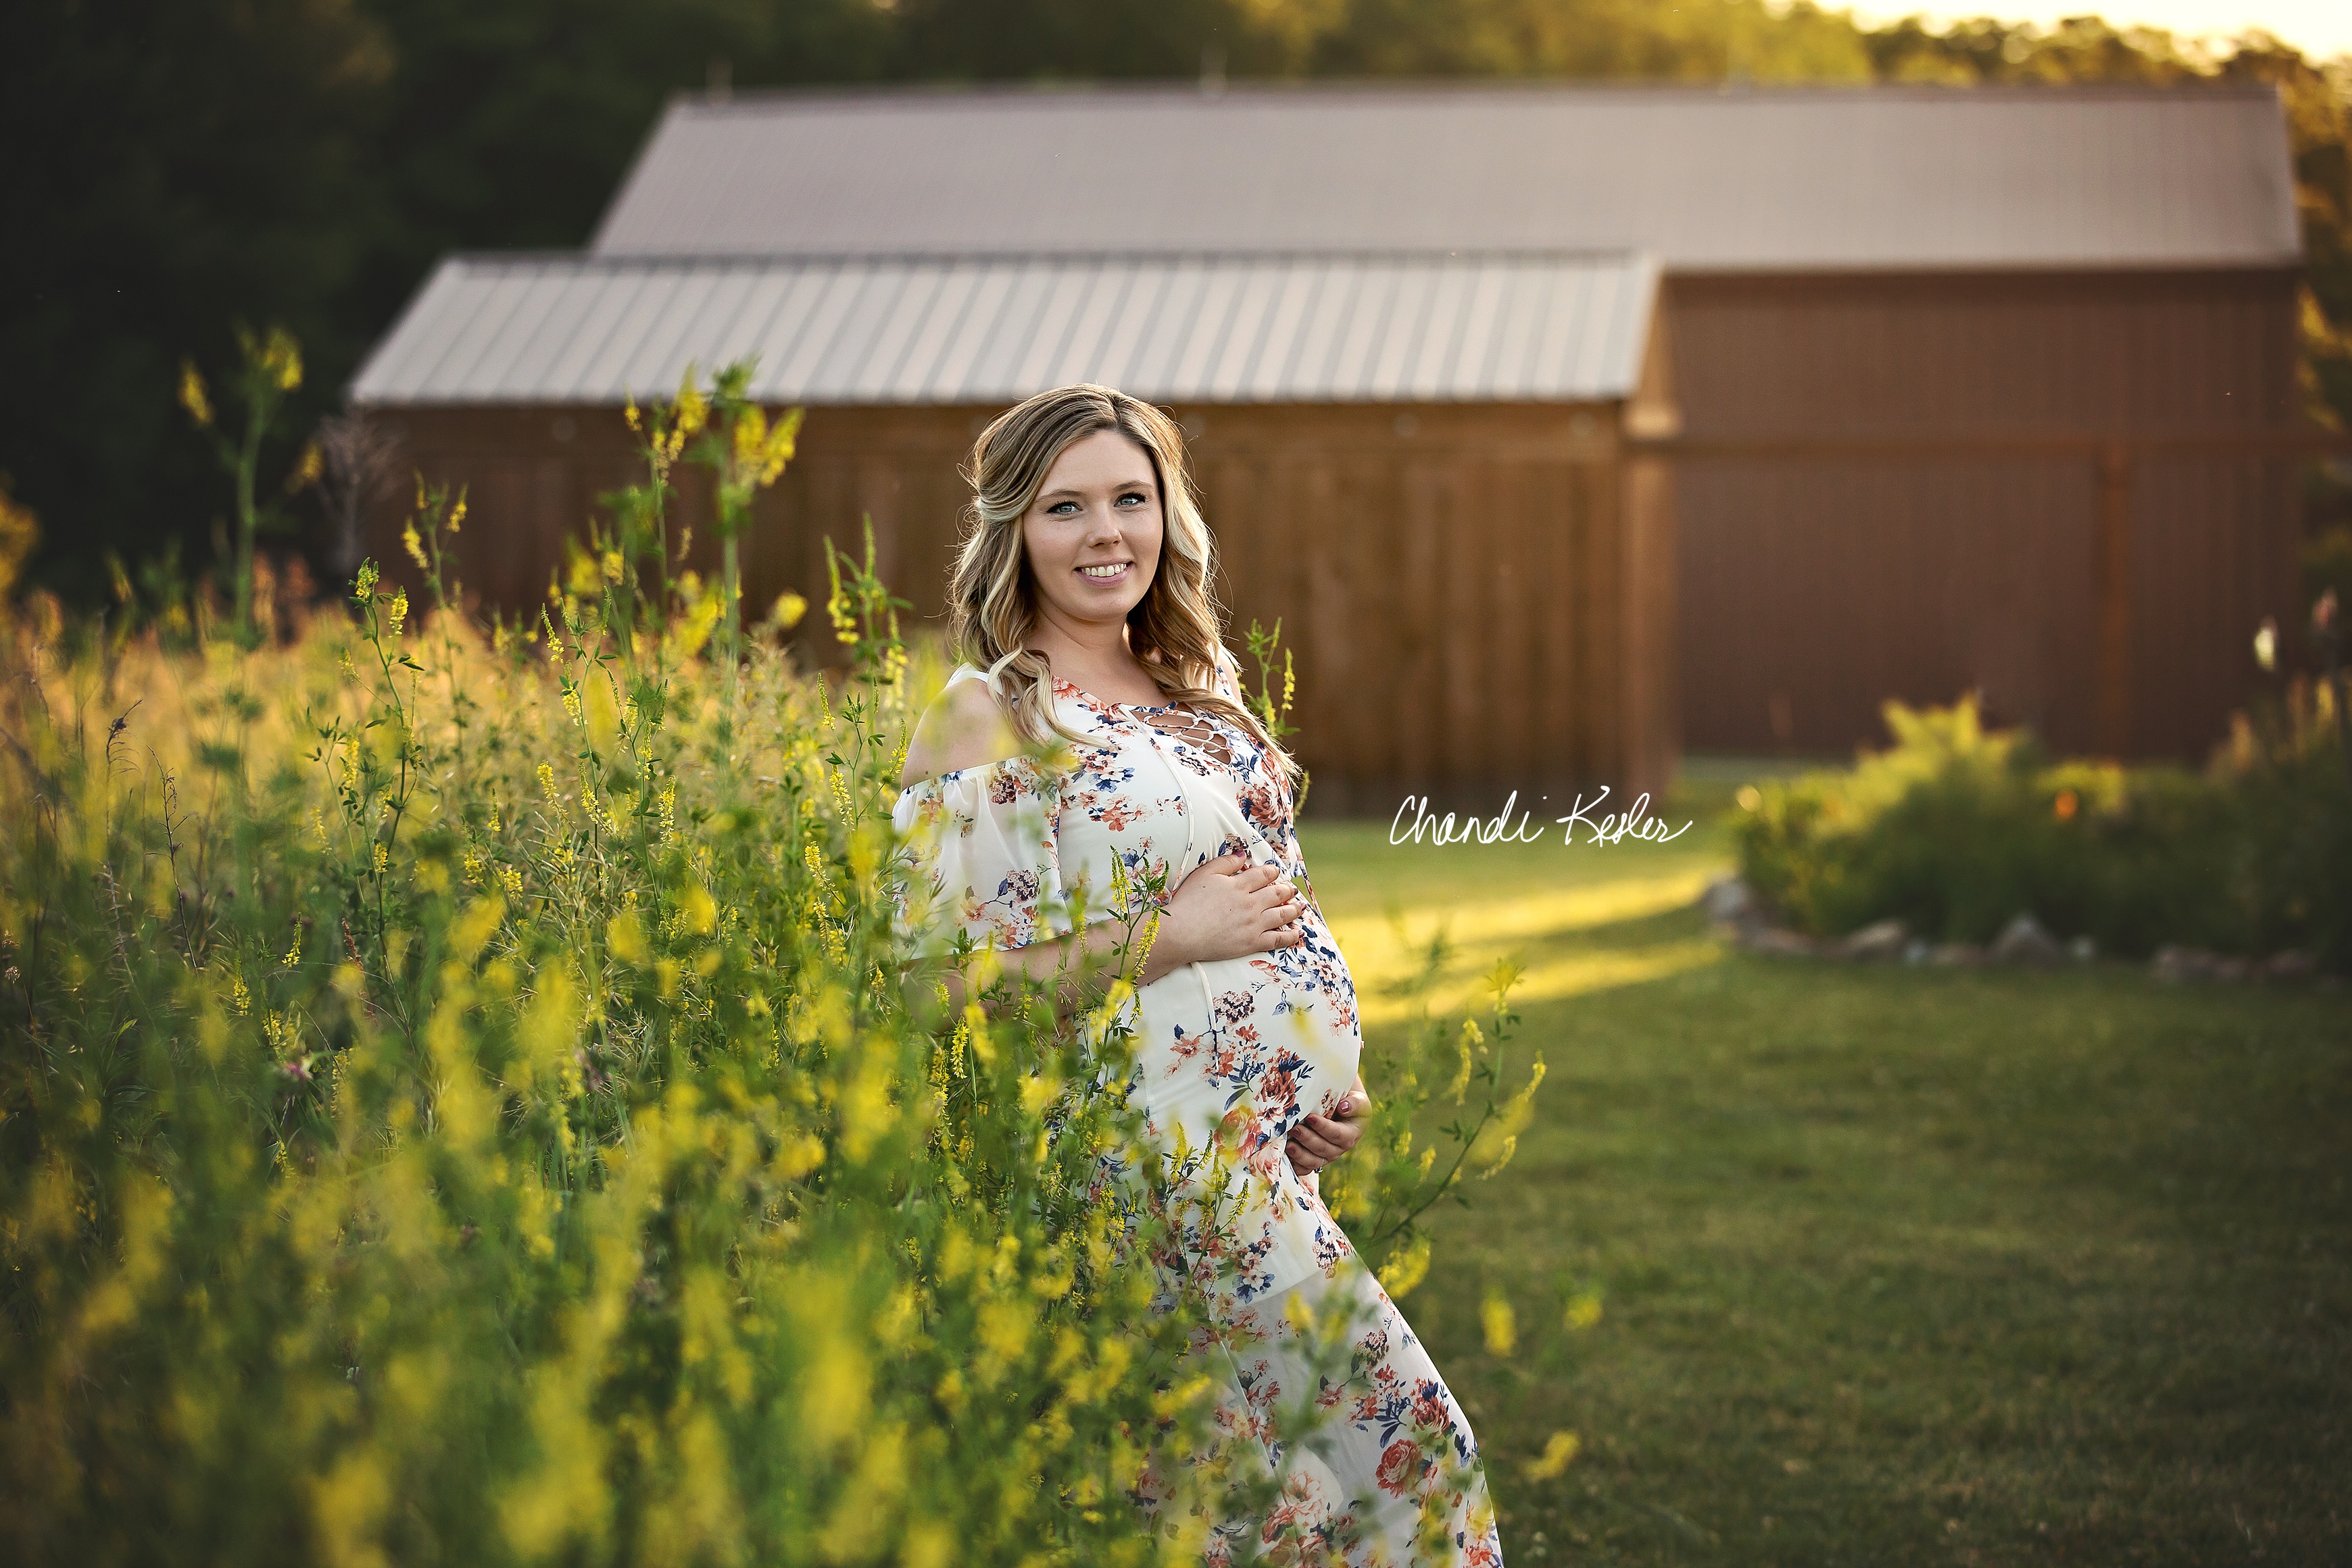 Chandi Kesler Photography | Best Maternity Photos | Pregnancy Photos Bloomington iL